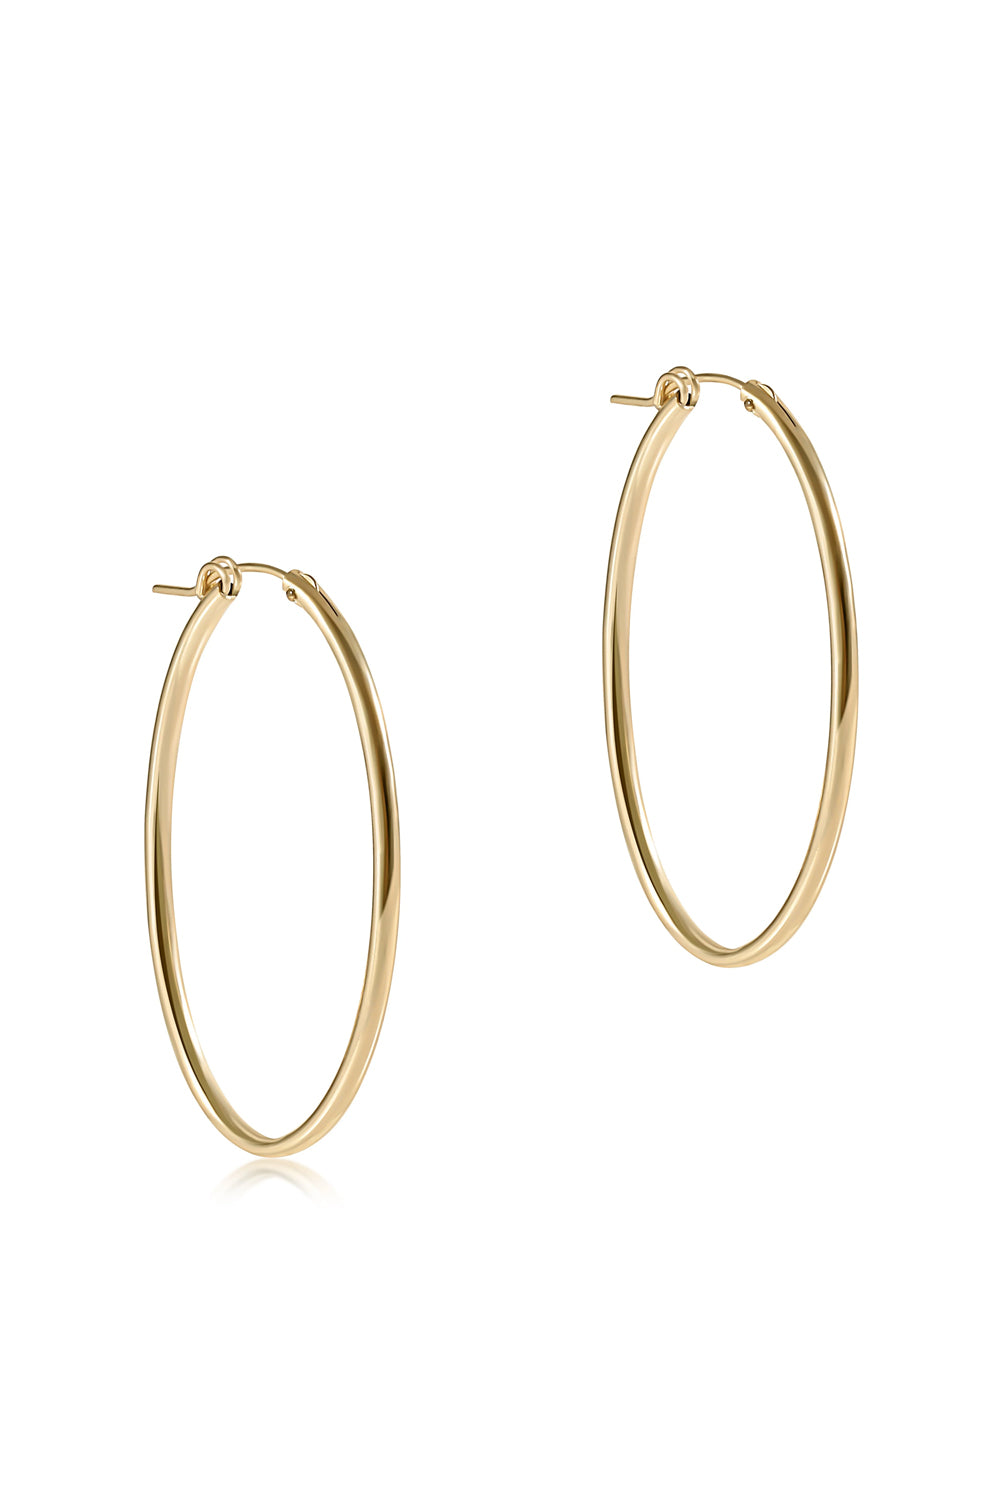 enewton: Oval Gold 2" Smooth Hoop Earrings | Makk Fashions